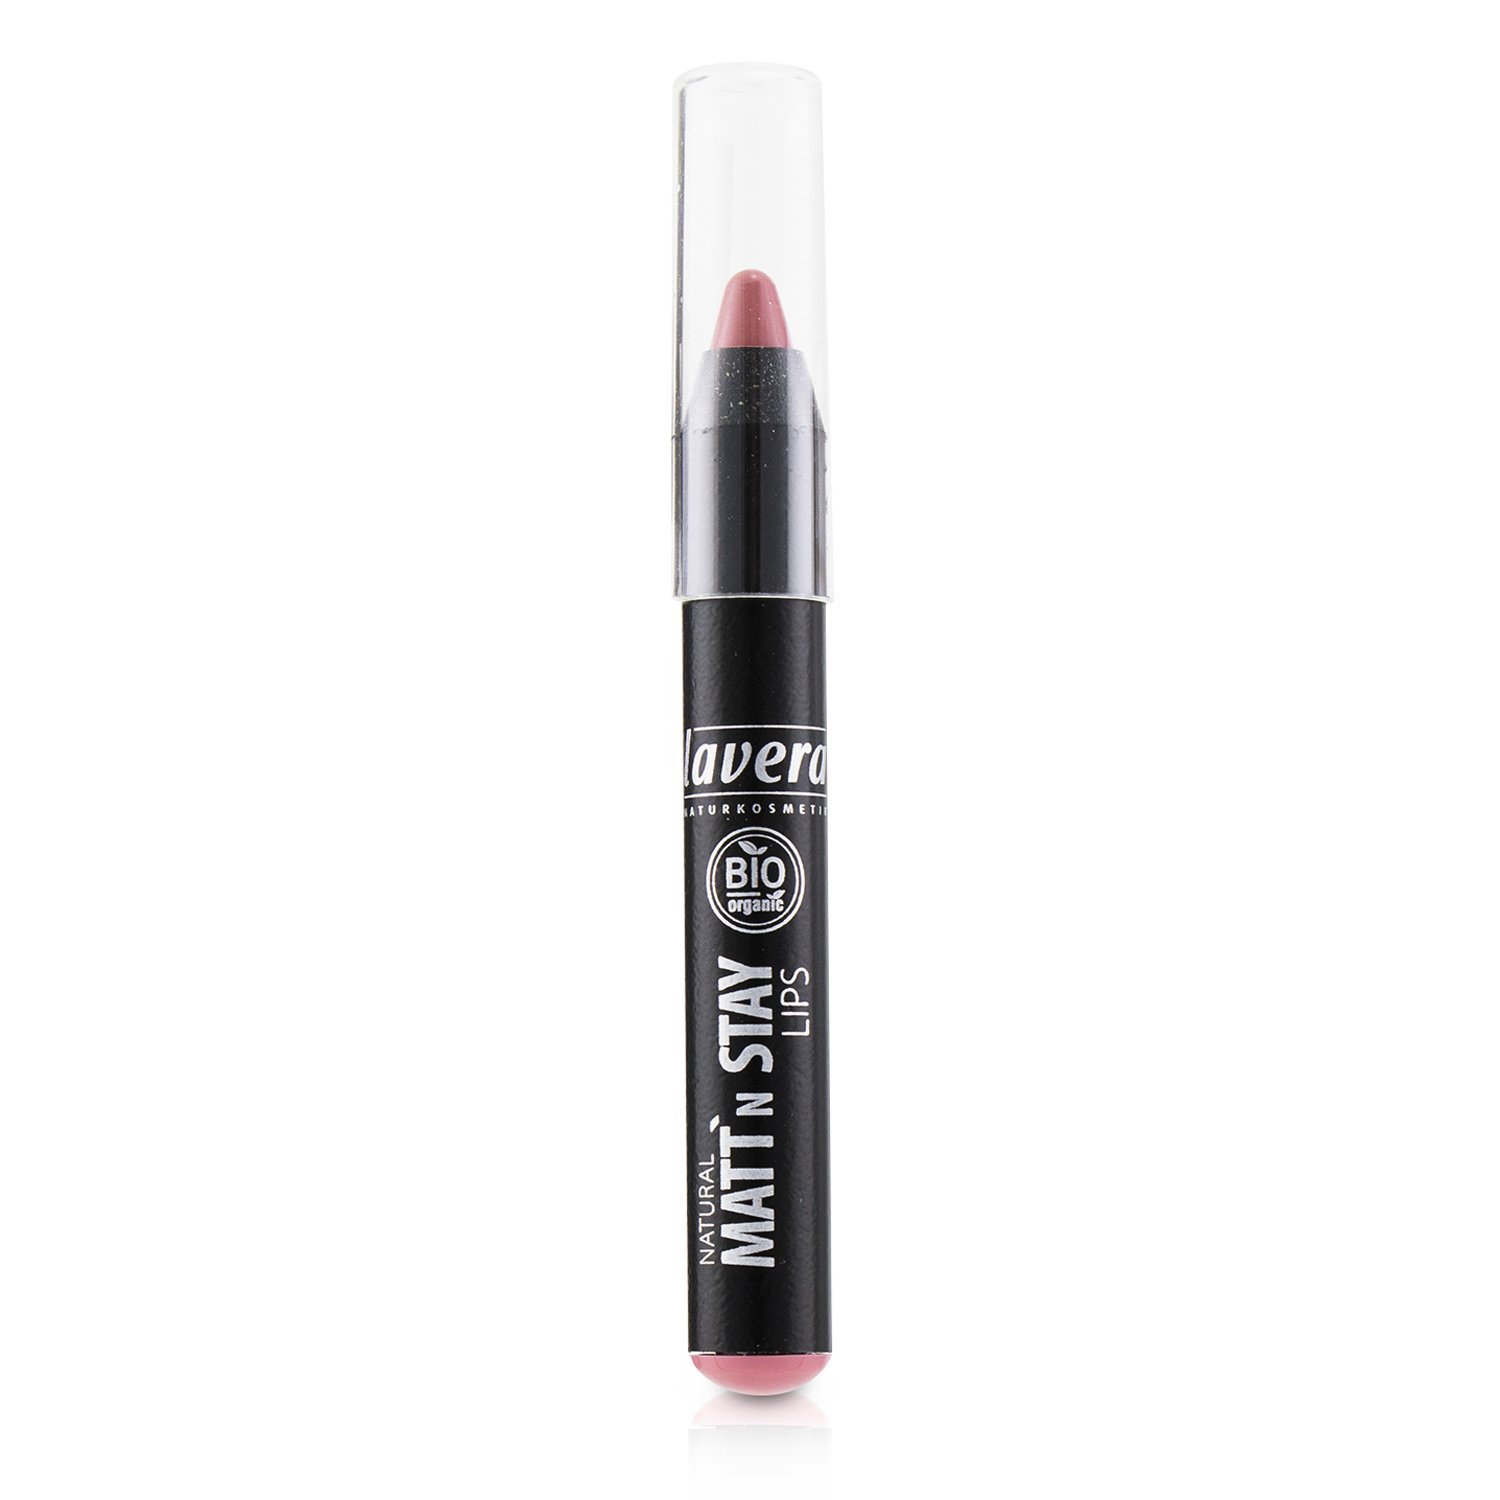 Chanel Rouge Allure L'extrait Lipstick - # 812 Beige Brut 2g/0.07oz